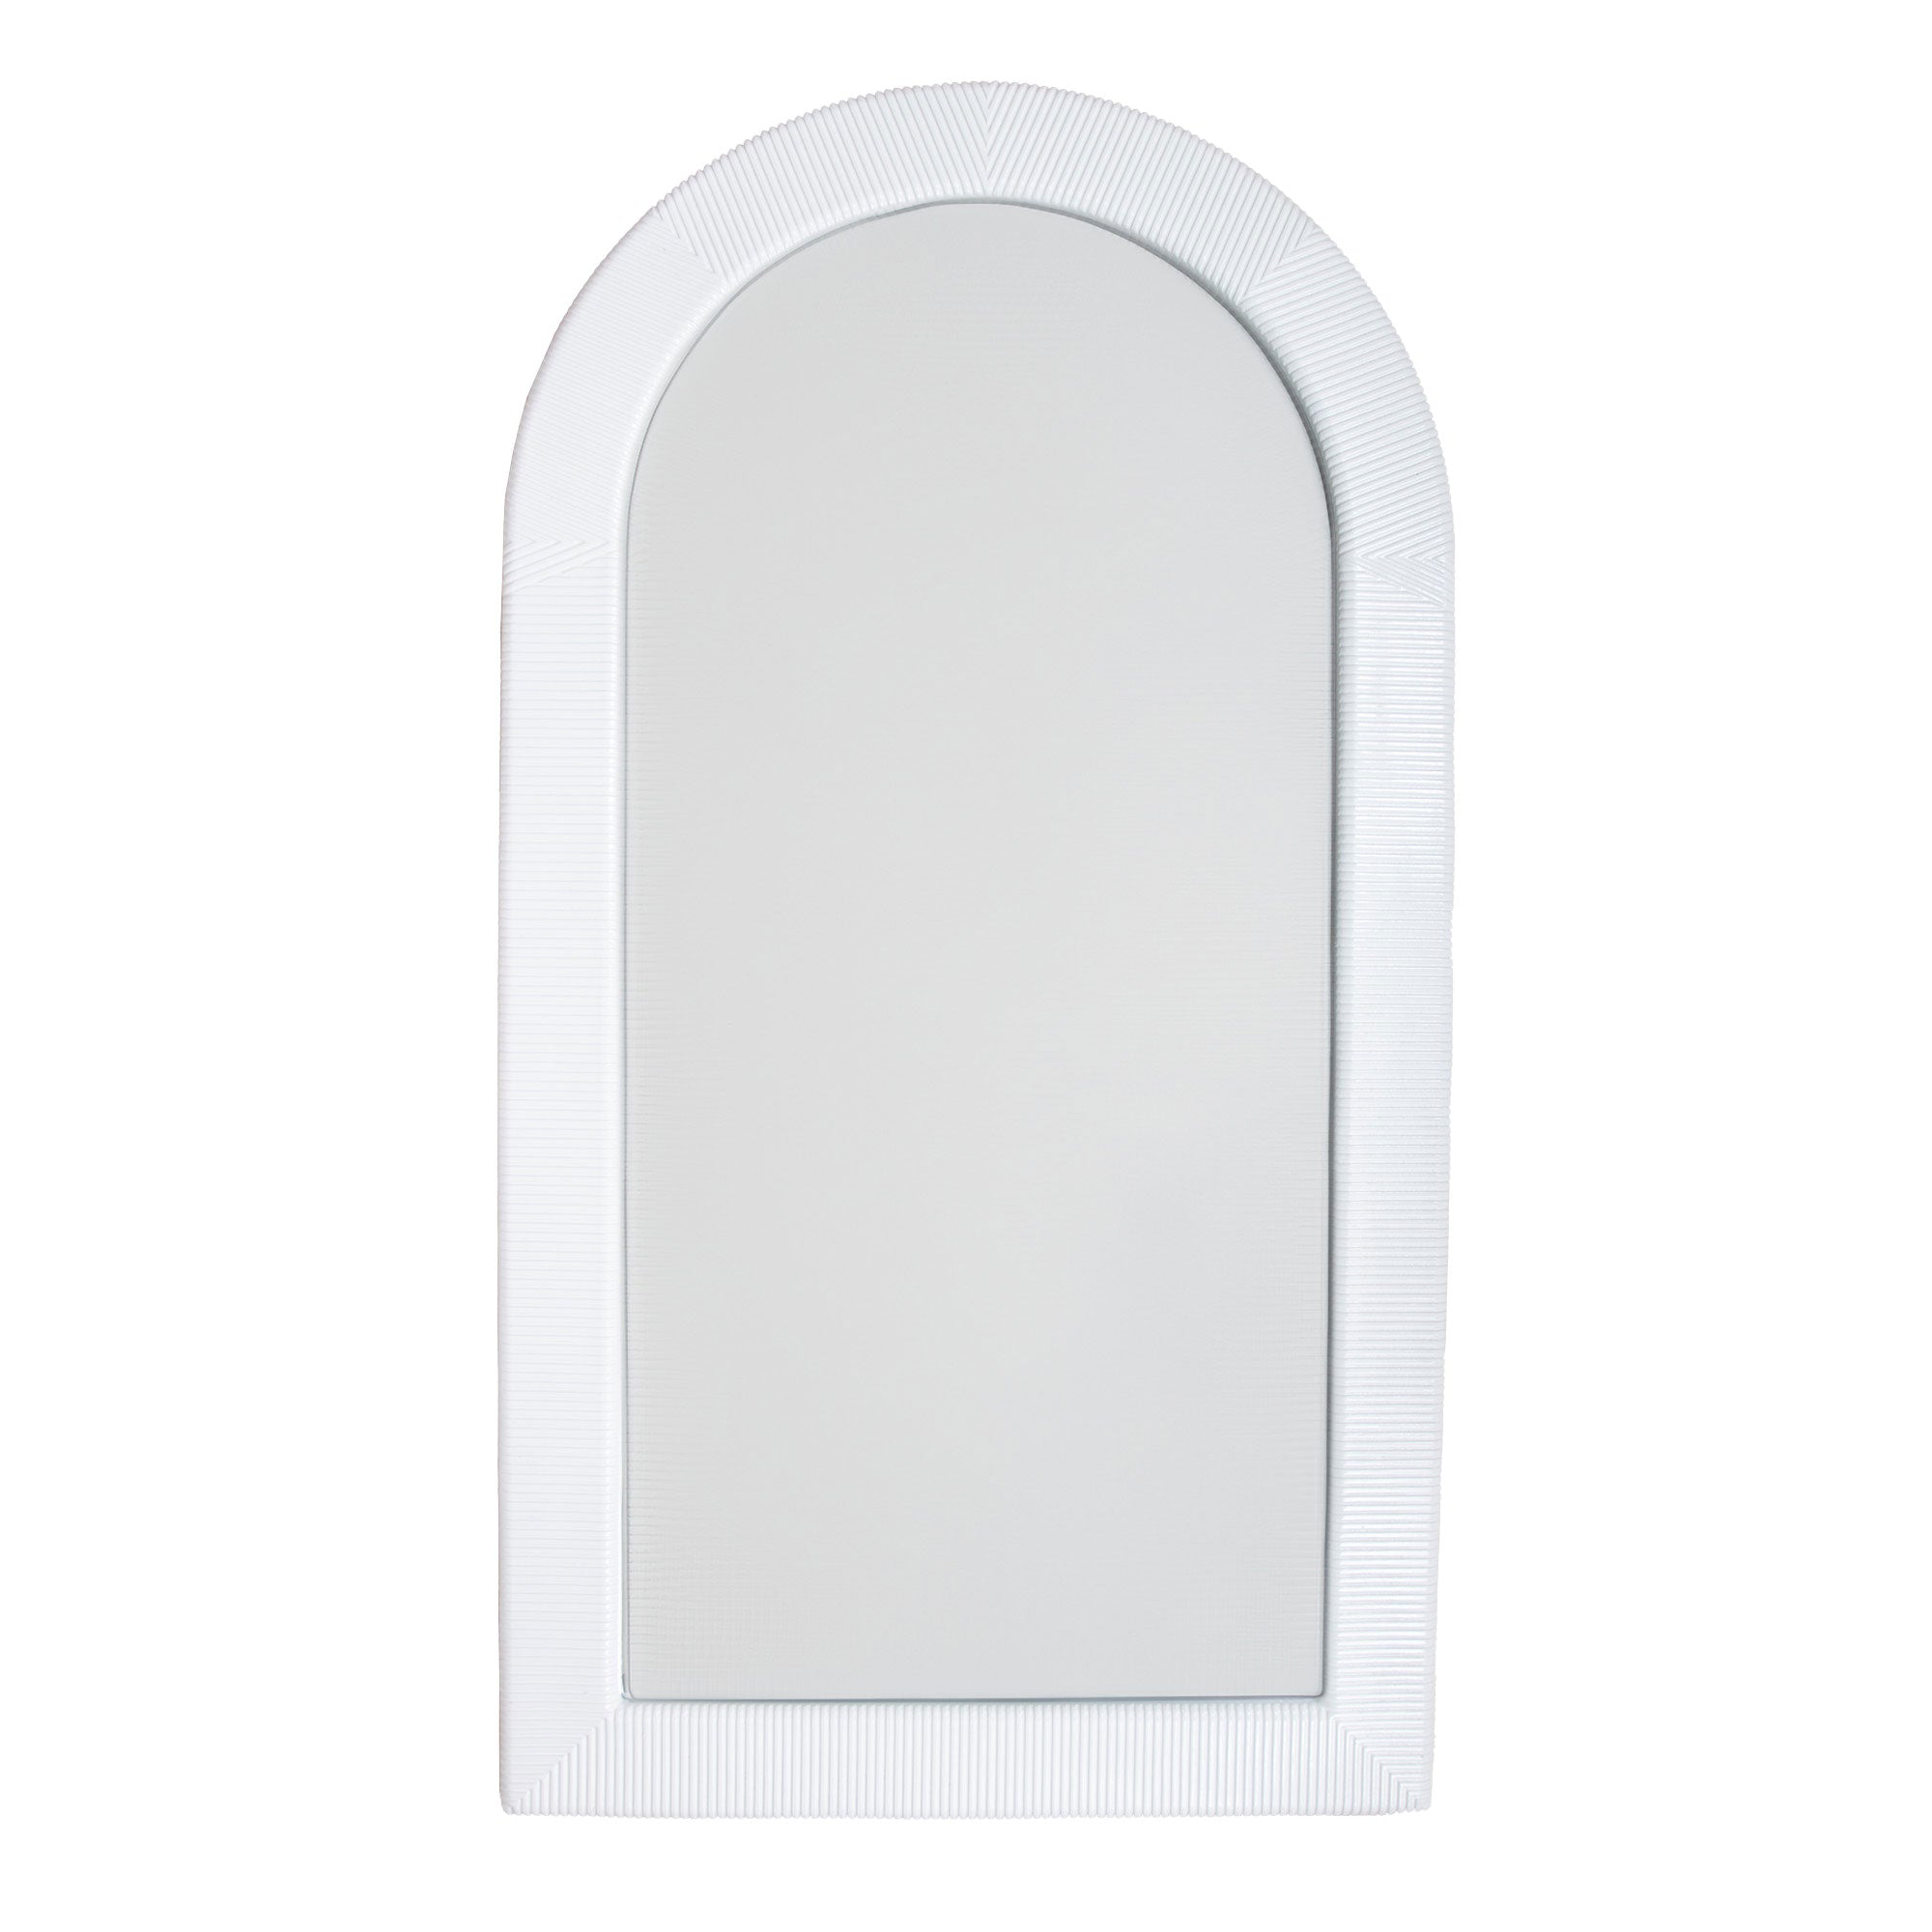 Moore - White Arch Mirror